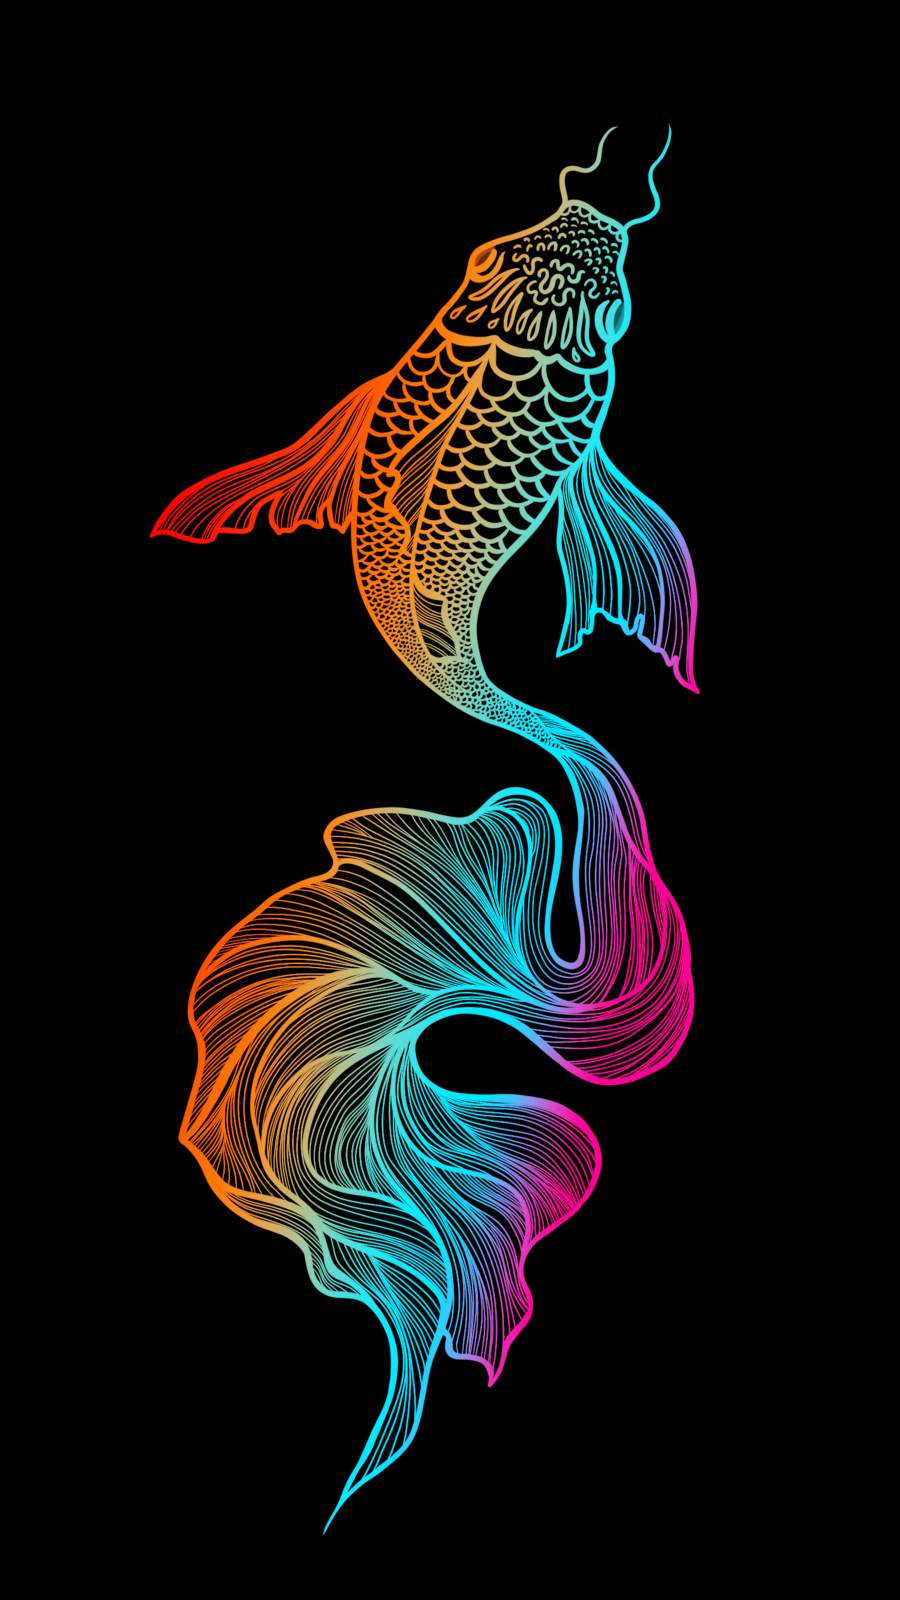 https://wallpapers.com/images/hd/neon-fish-art-iphone-v8mkbl2hexgfuyo9.jpg